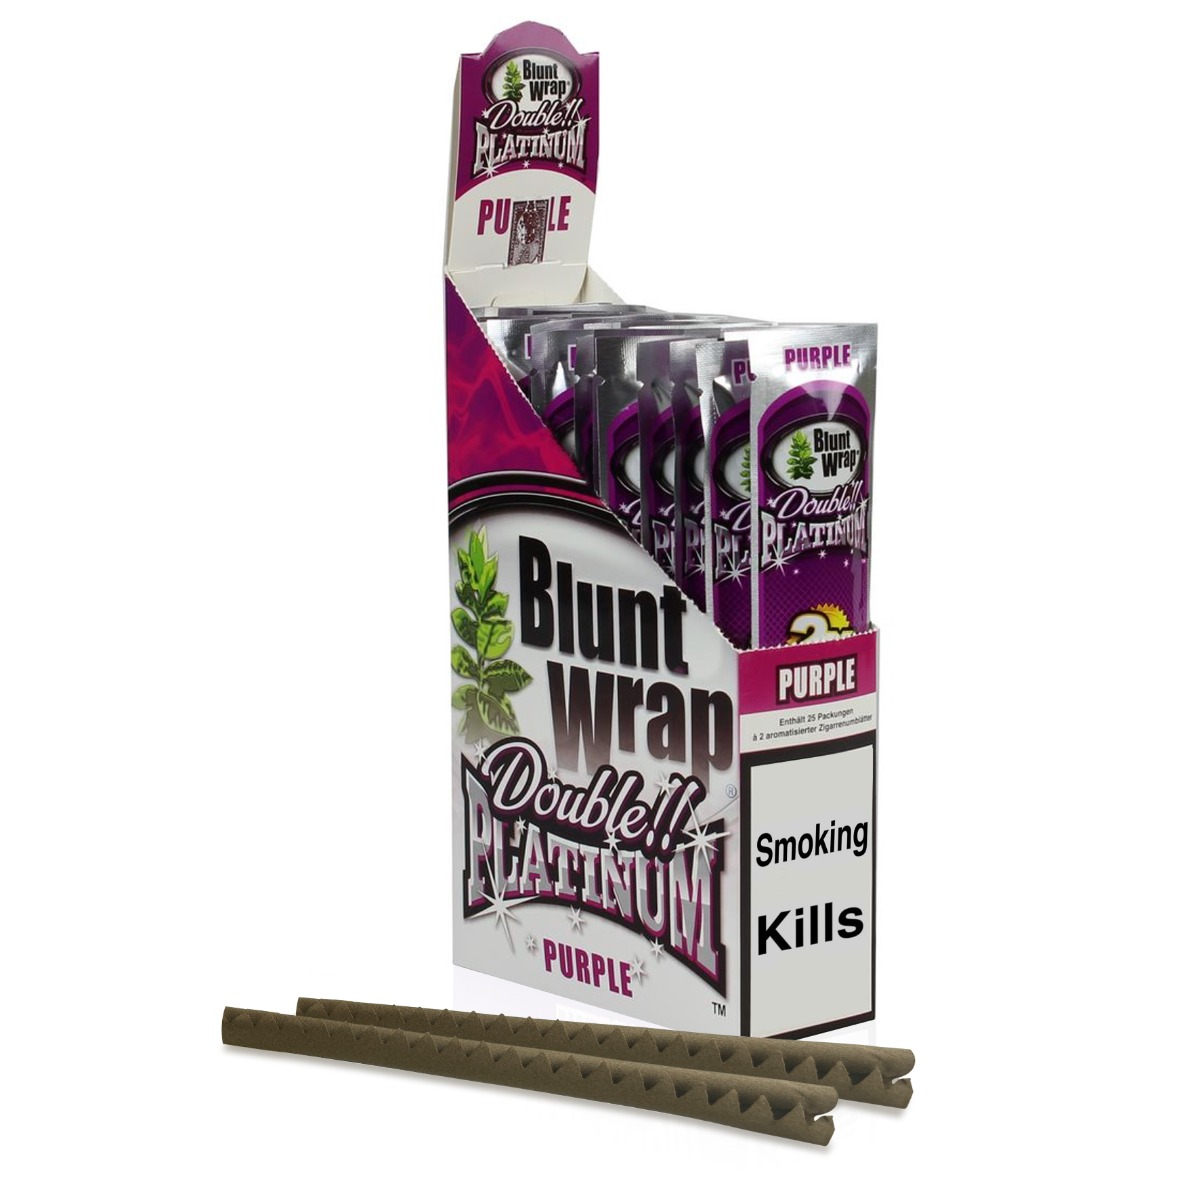 Blunt wrap double platinum - purple - pack of 2